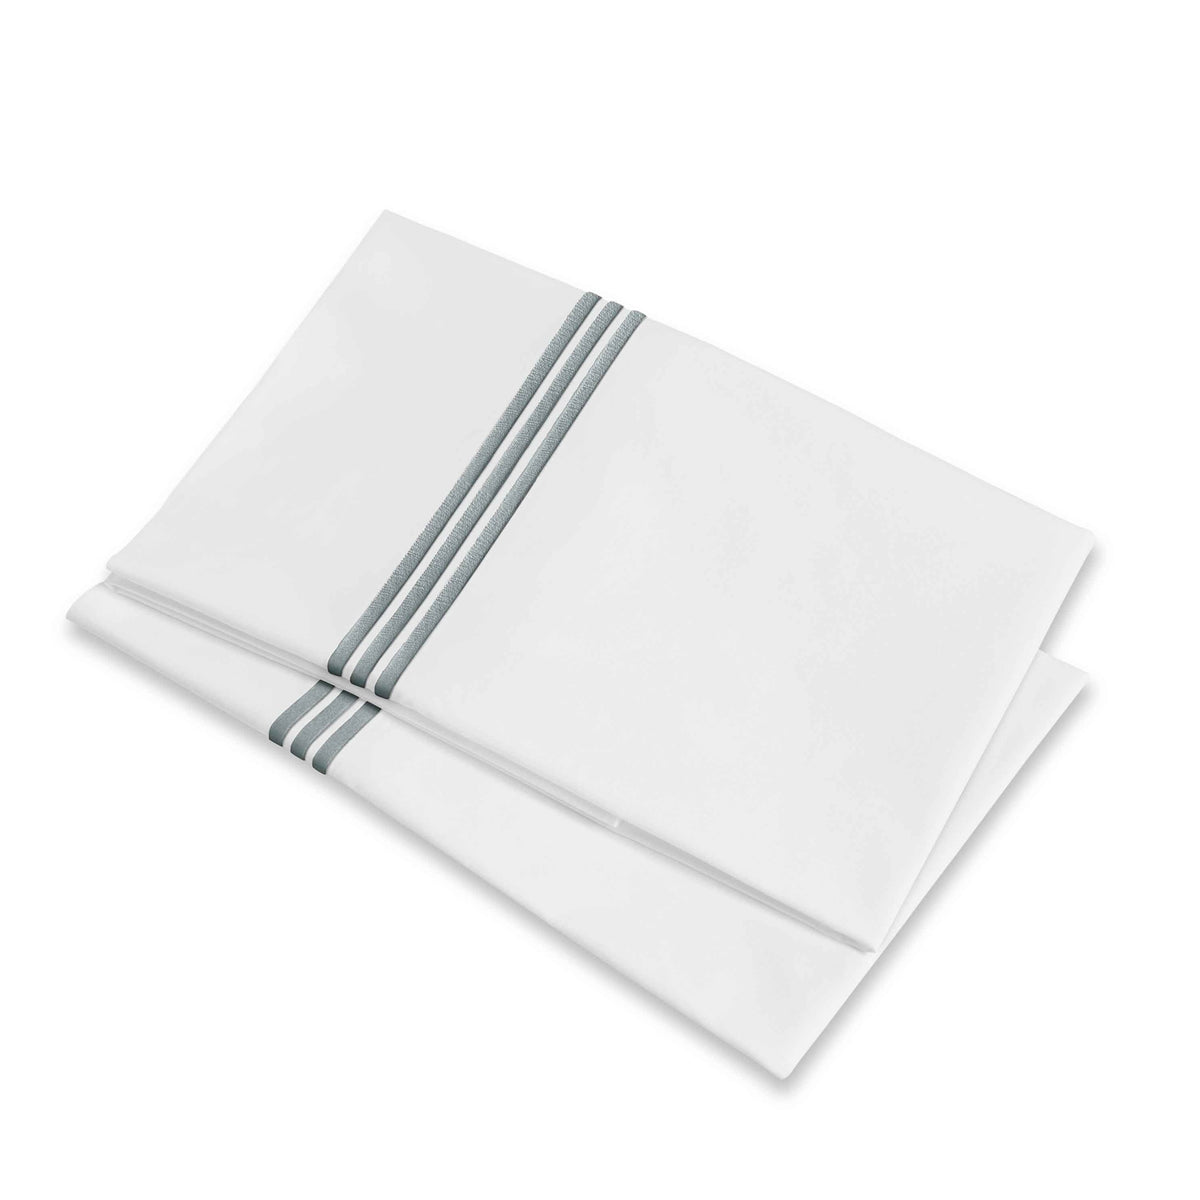 Folded Pillowcases of Signoria Platinum Percale Bedding in White/Wilton Blue Color